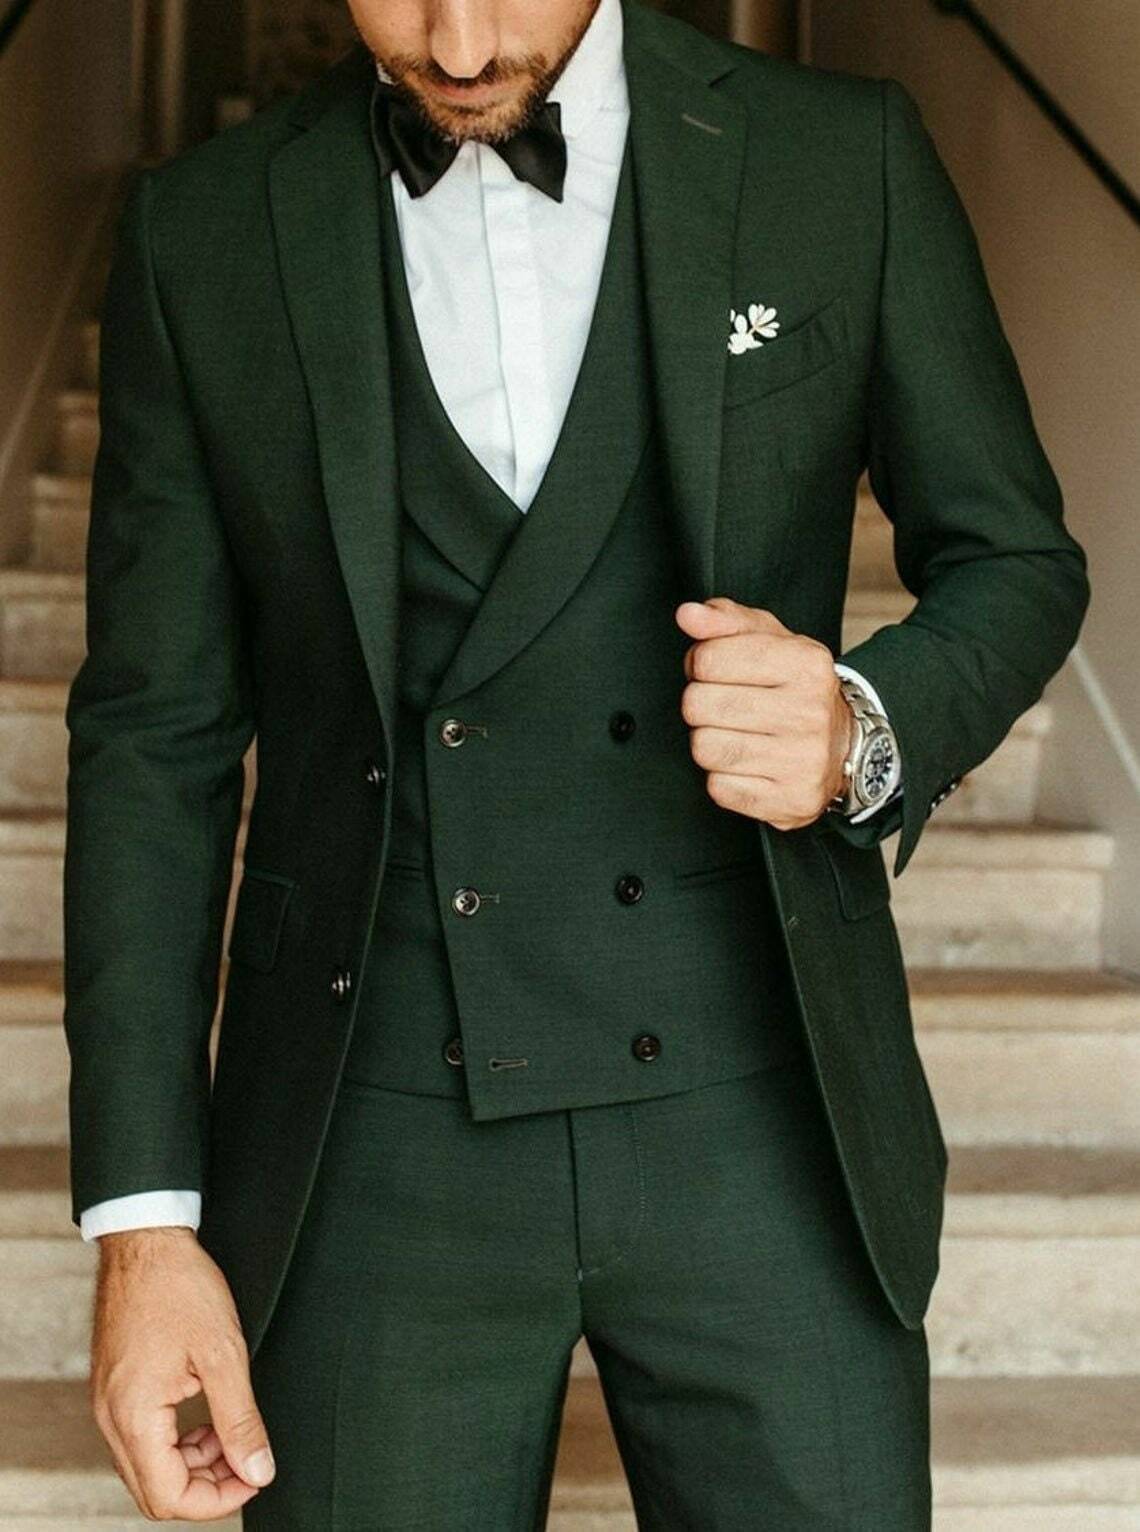 Pre-owned Handmade Mens Tuxedo Suit 3 Pc Slim Fit Green Suit Jacket Evening Party Wear Coat Pants